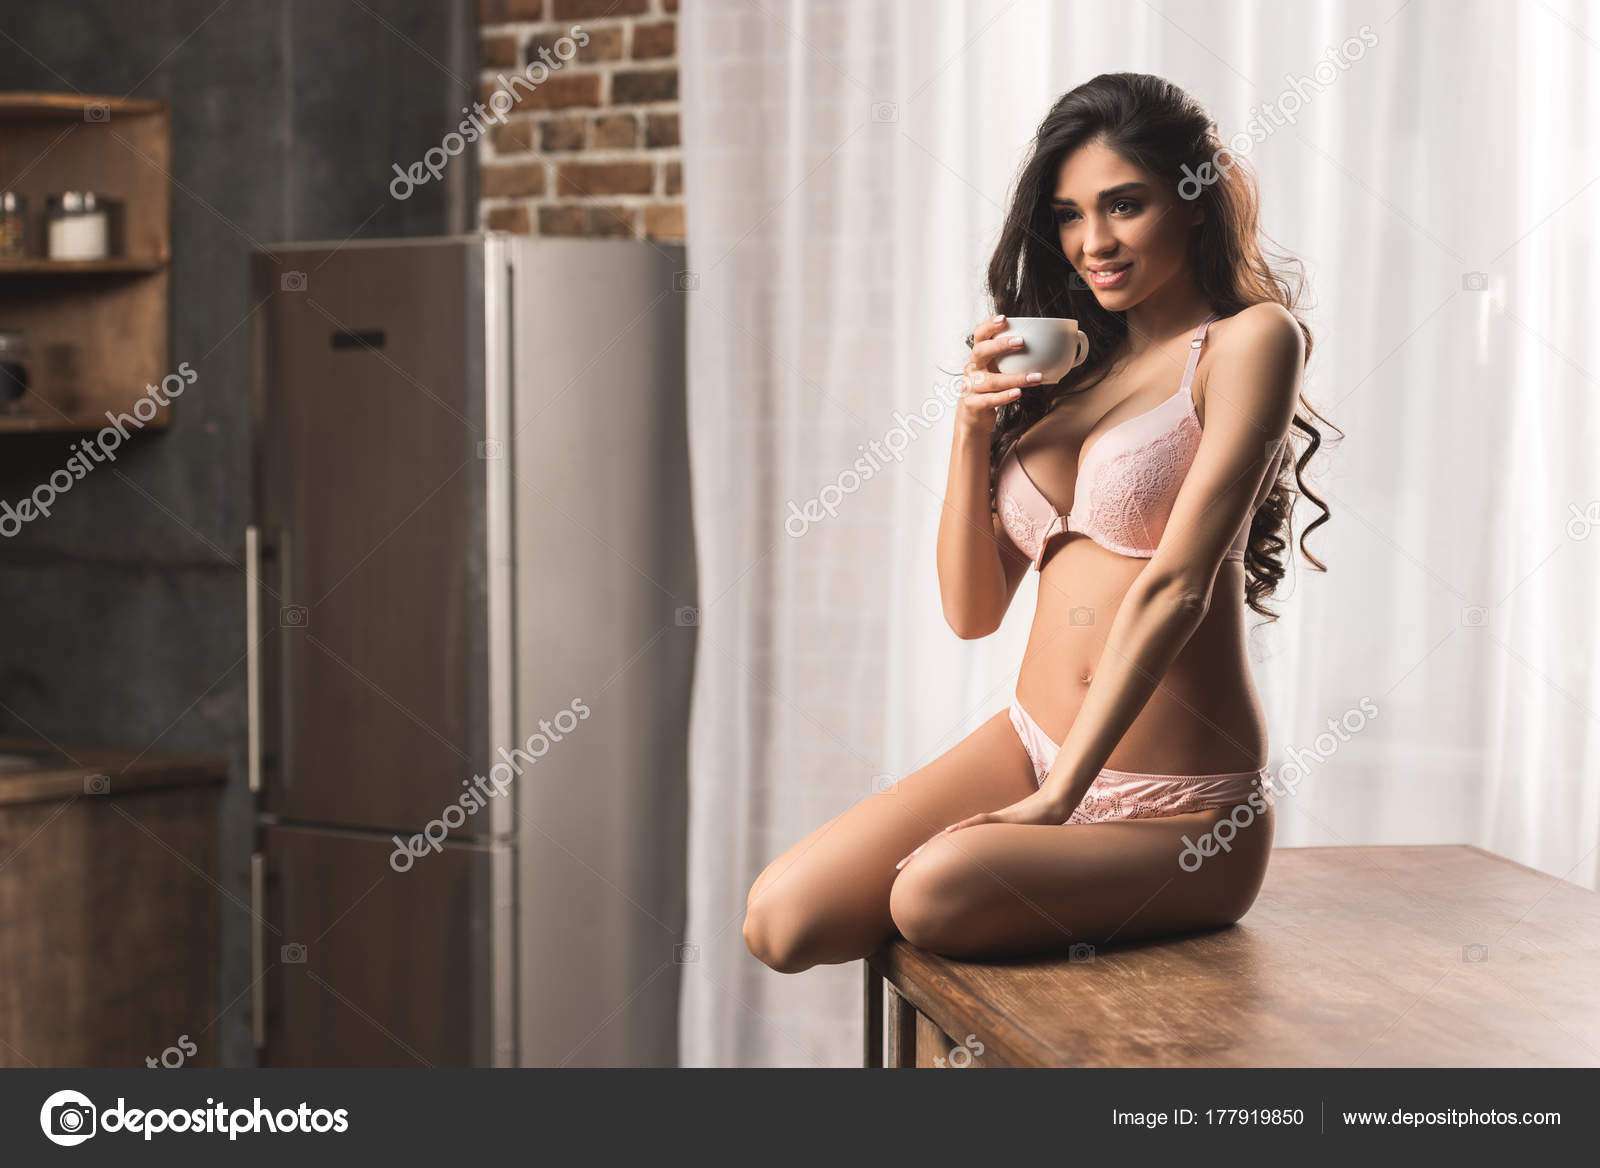 depositphotos_-stock-photo-sexy-smiling-girl-underwear-drinking